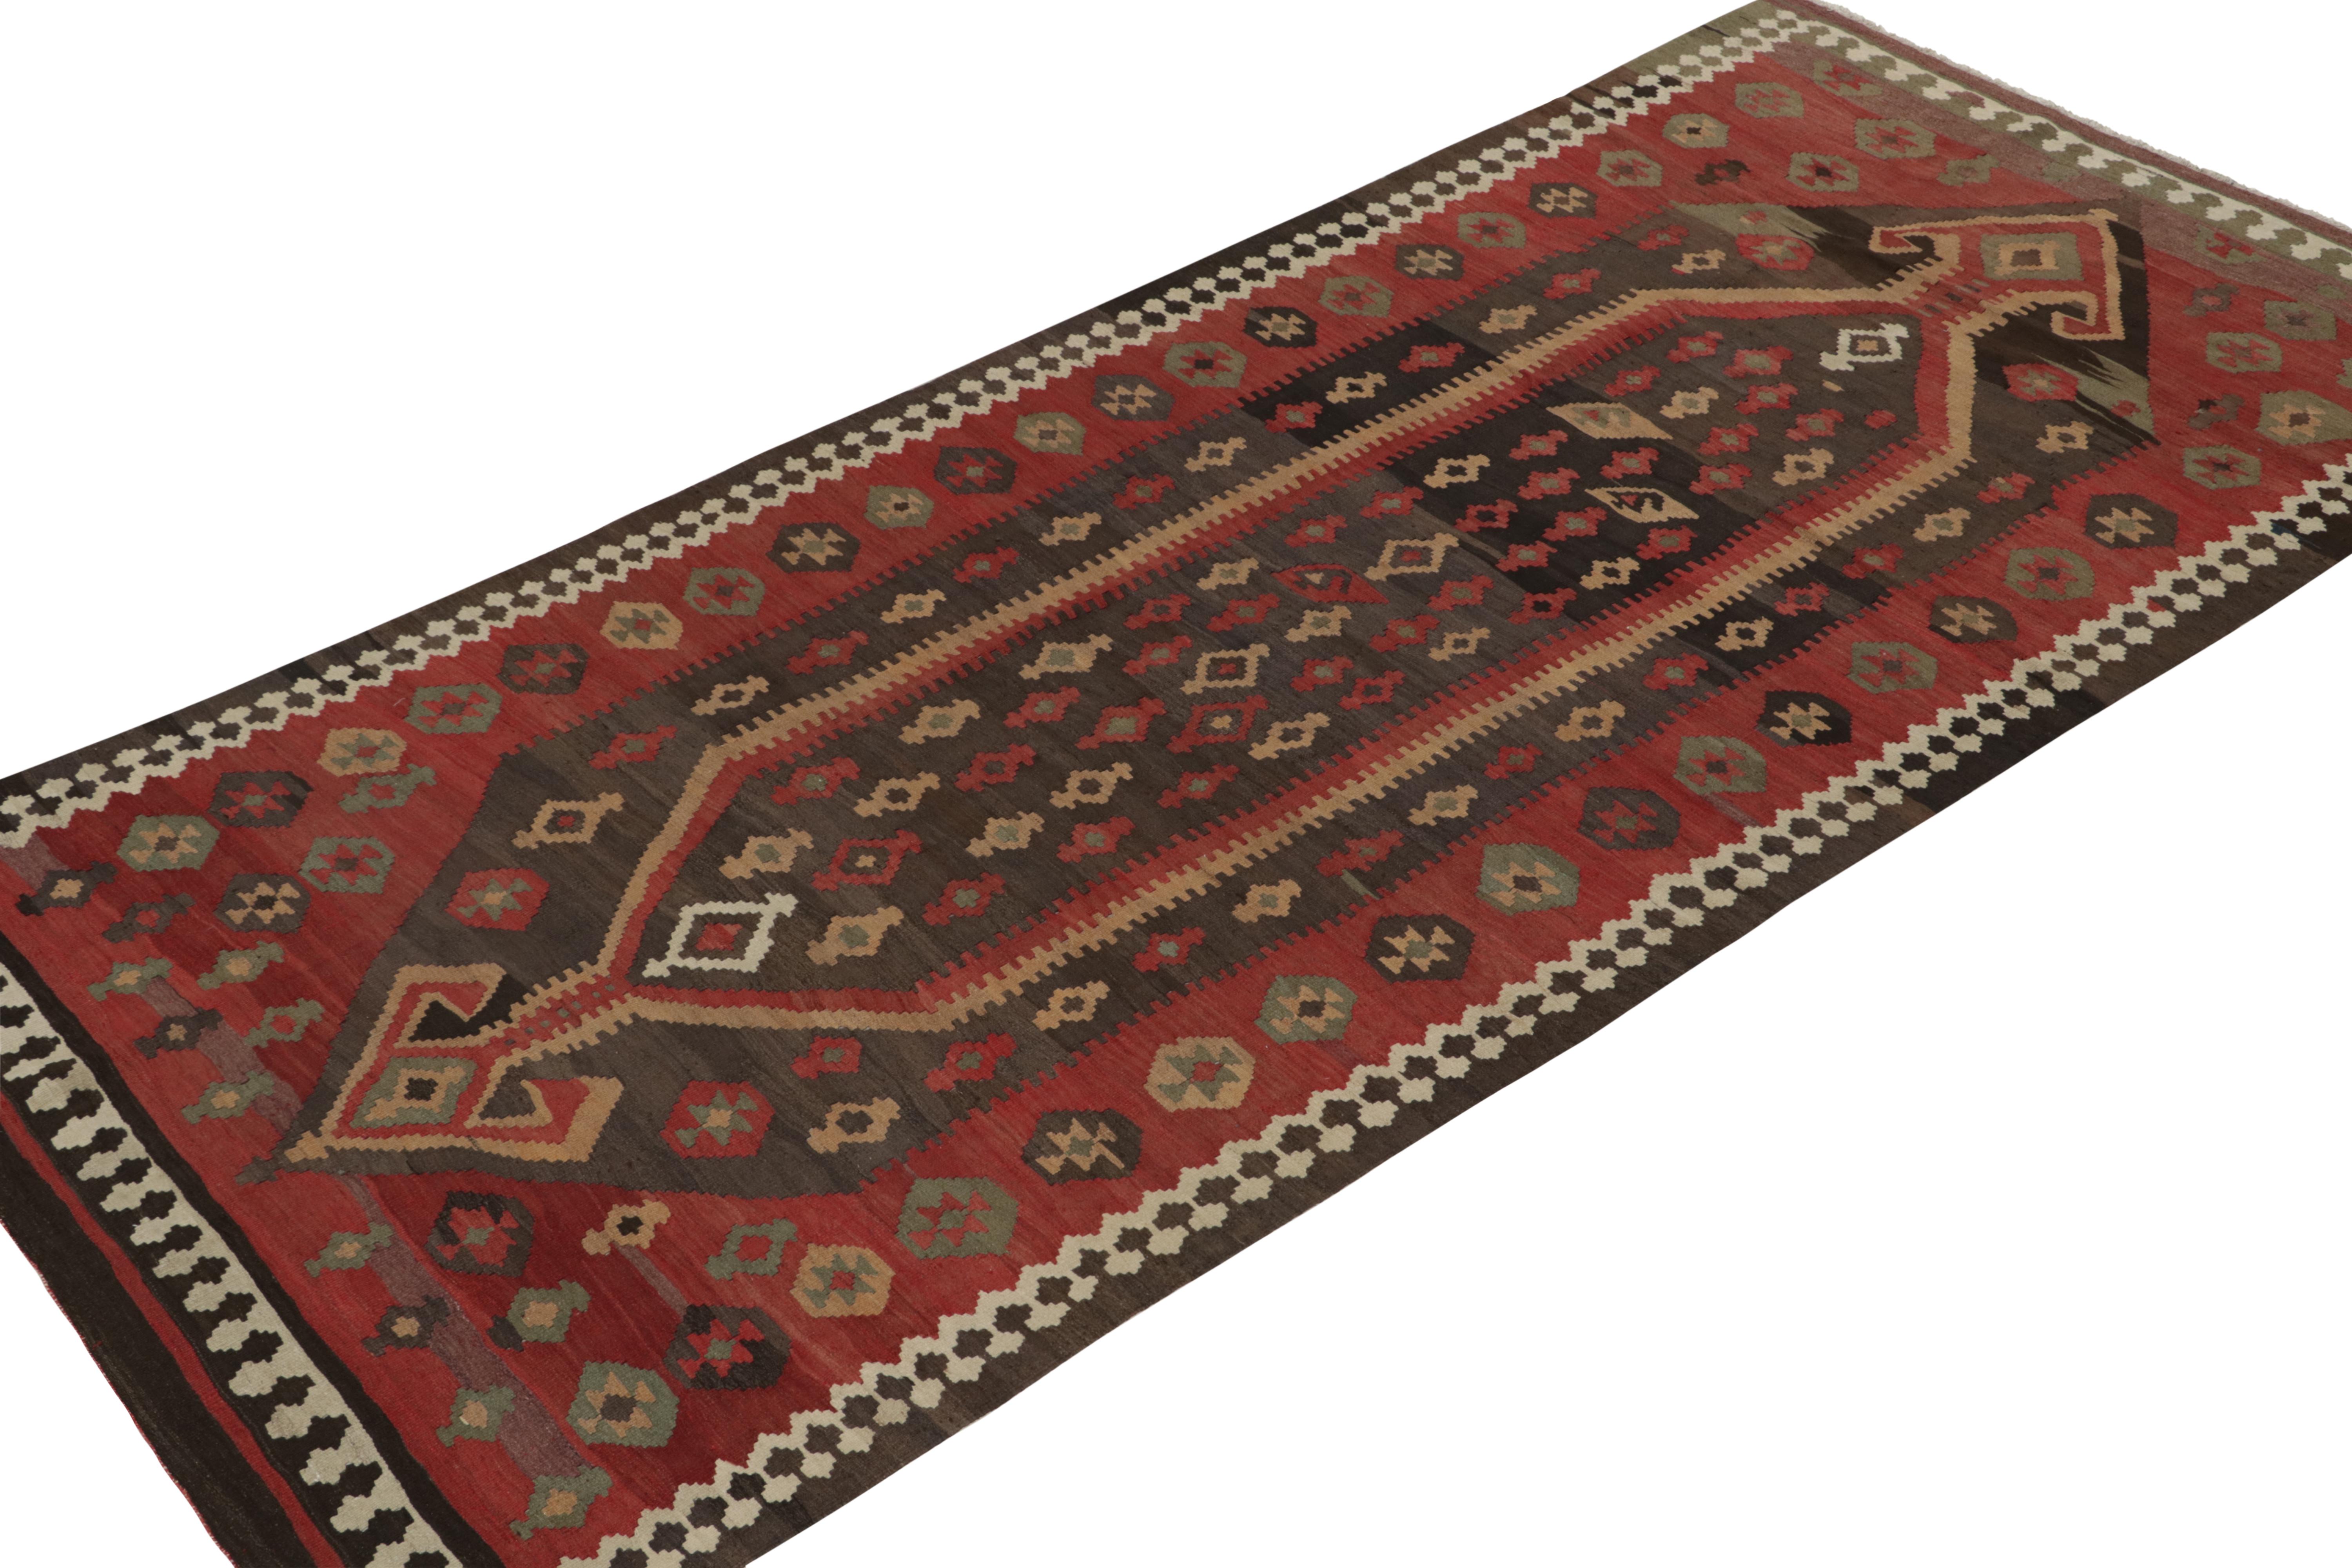 Tribal Vintage Shahsavan Persian Kilim in Red and Brown Patterns by Rug & Kilim For Sale